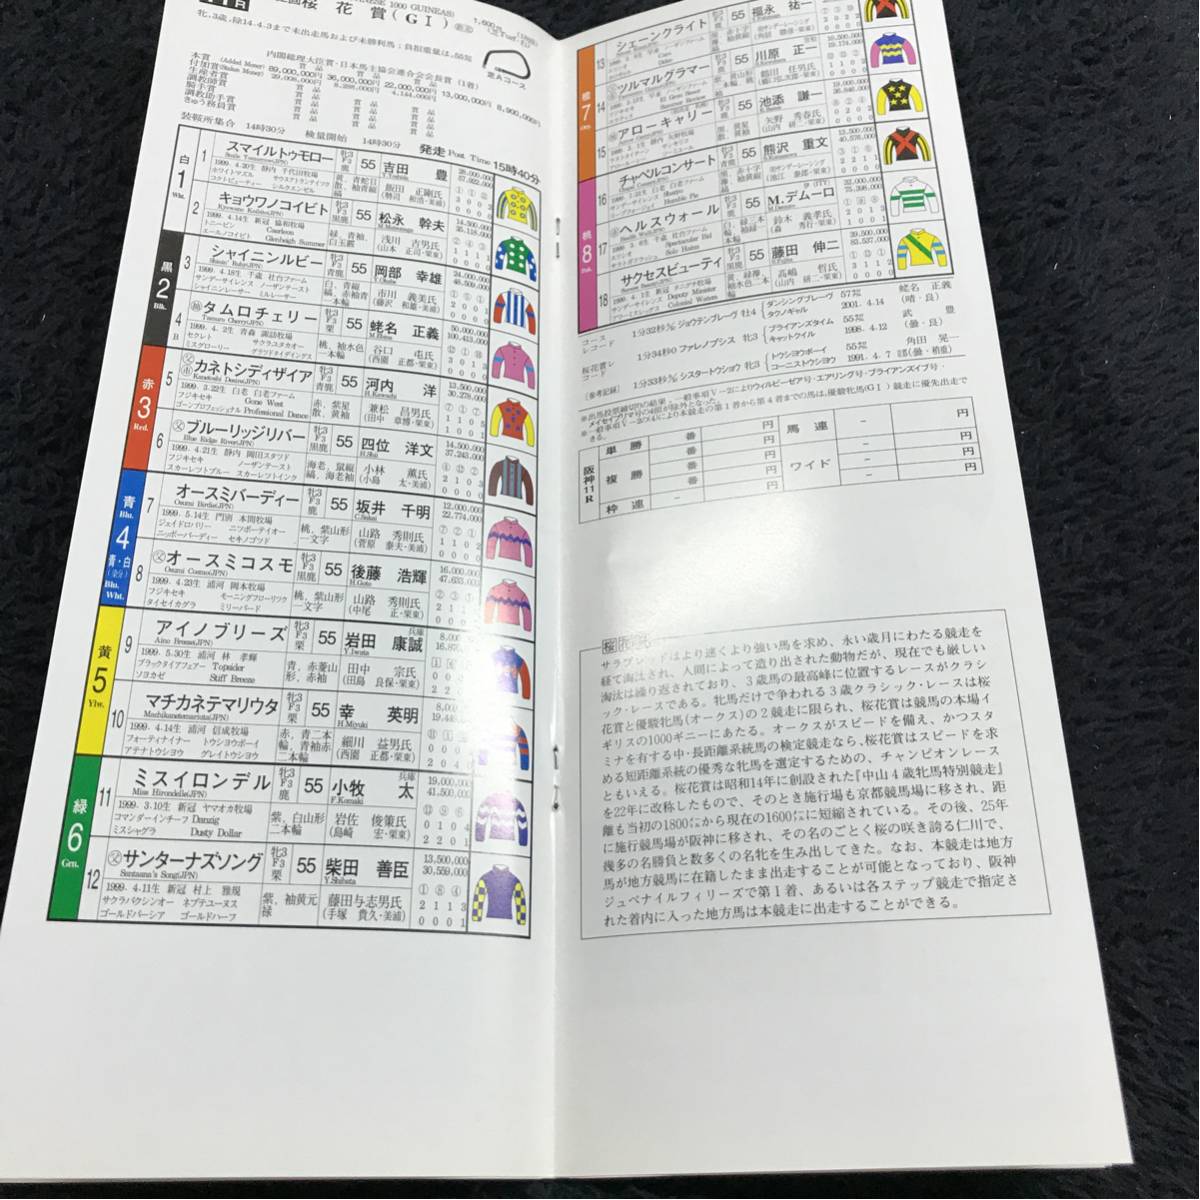 [JRAre- Pro ] no. 62 times Sakura flower . Racing Program (2002.4.7)| Hanshin horse racing place | cover * Tey M Ocean 